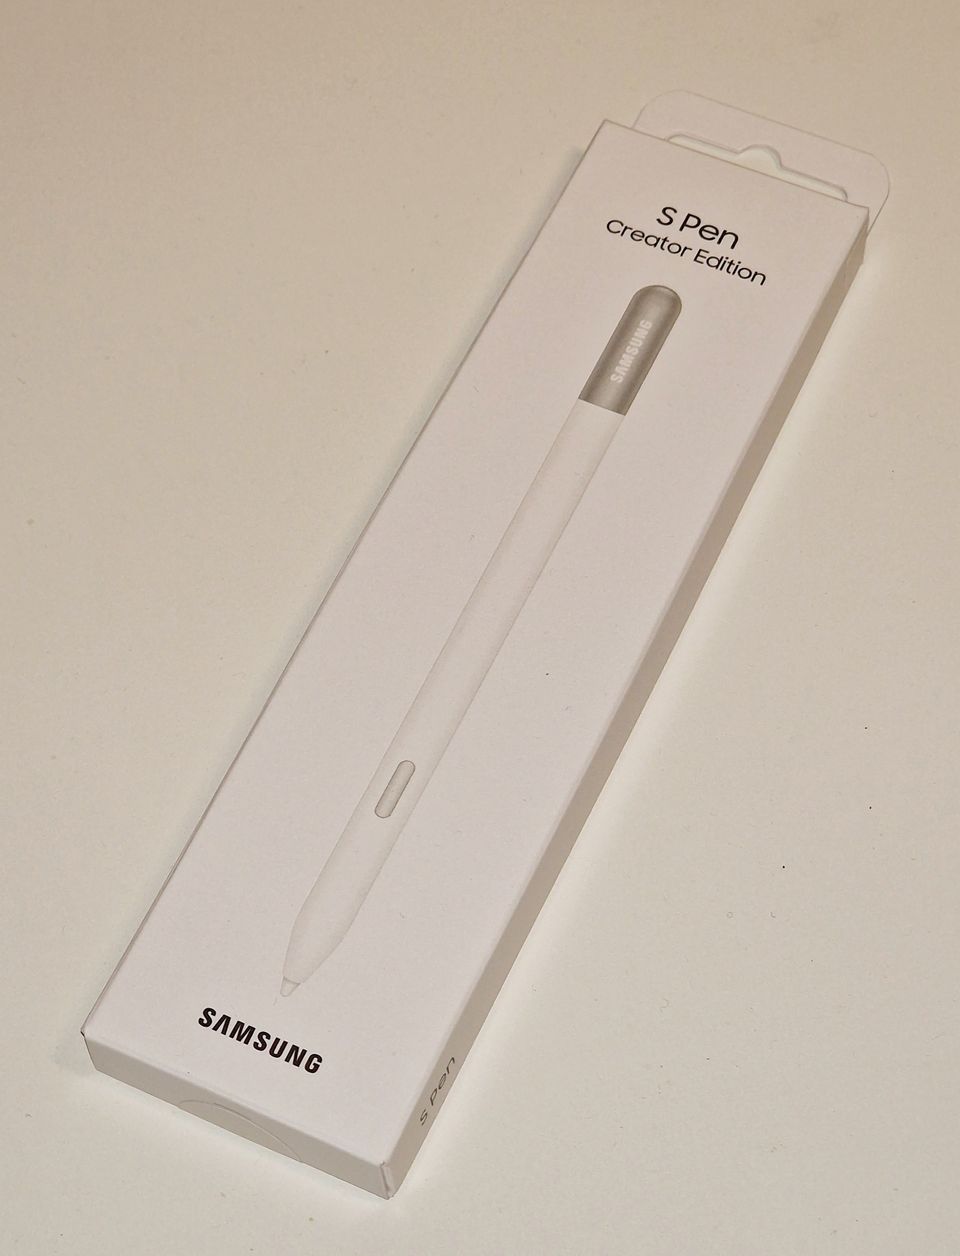 Samsung S-Pen Creator Edition